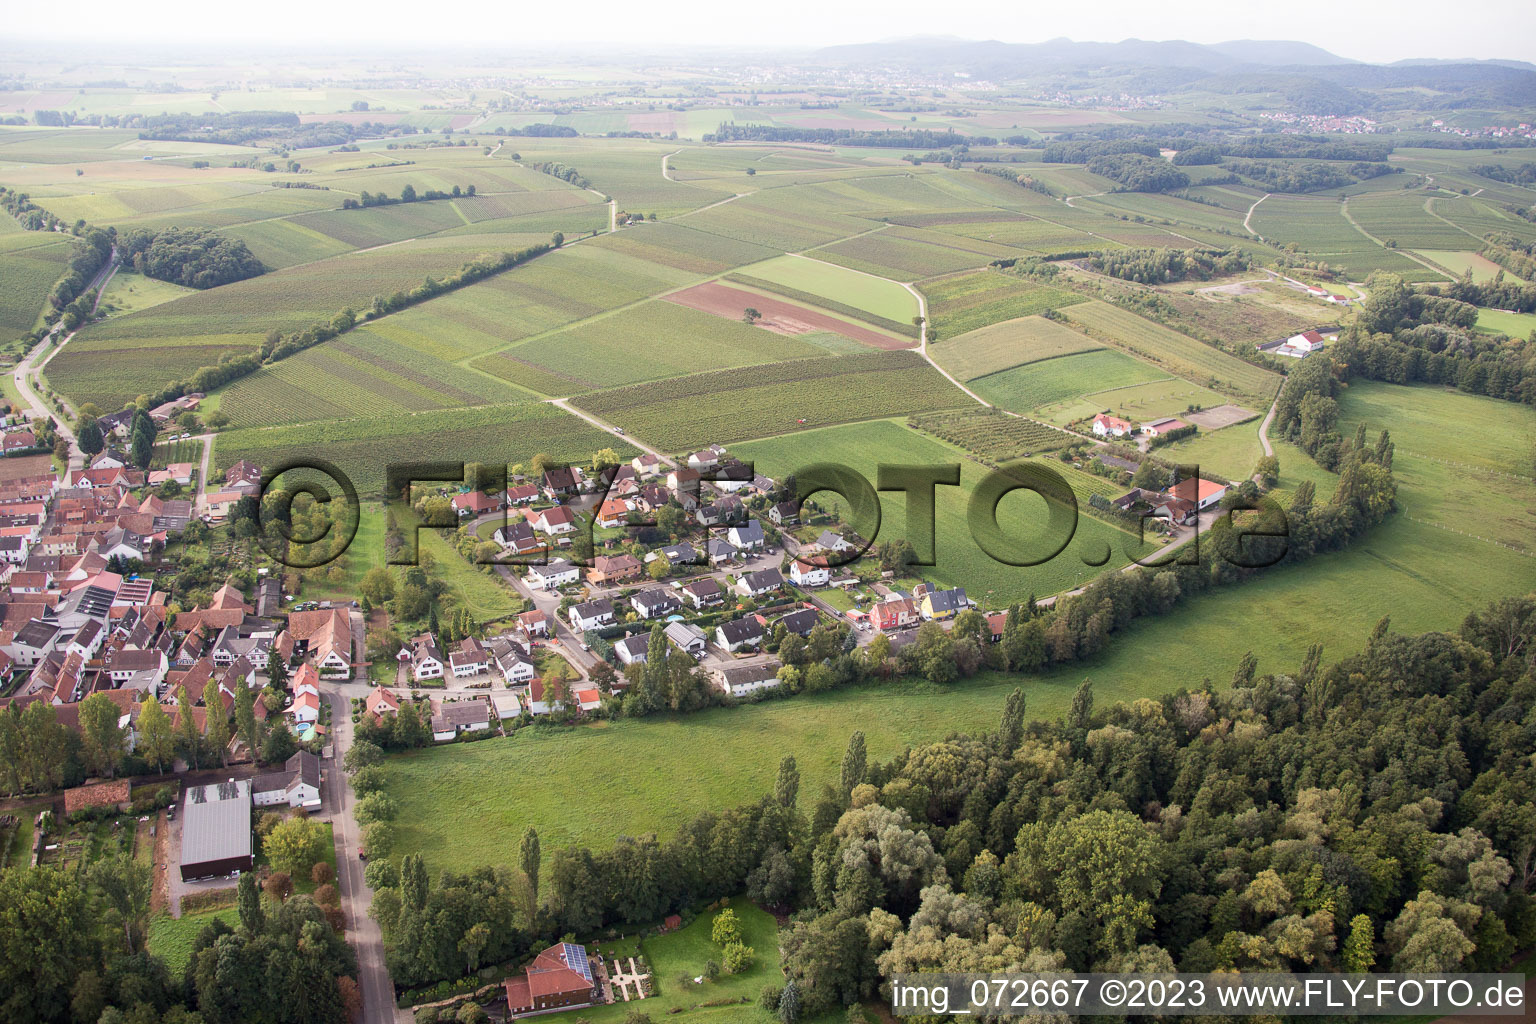 District Klingen in Heuchelheim-Klingen in the state Rhineland-Palatinate, Germany from the drone perspective